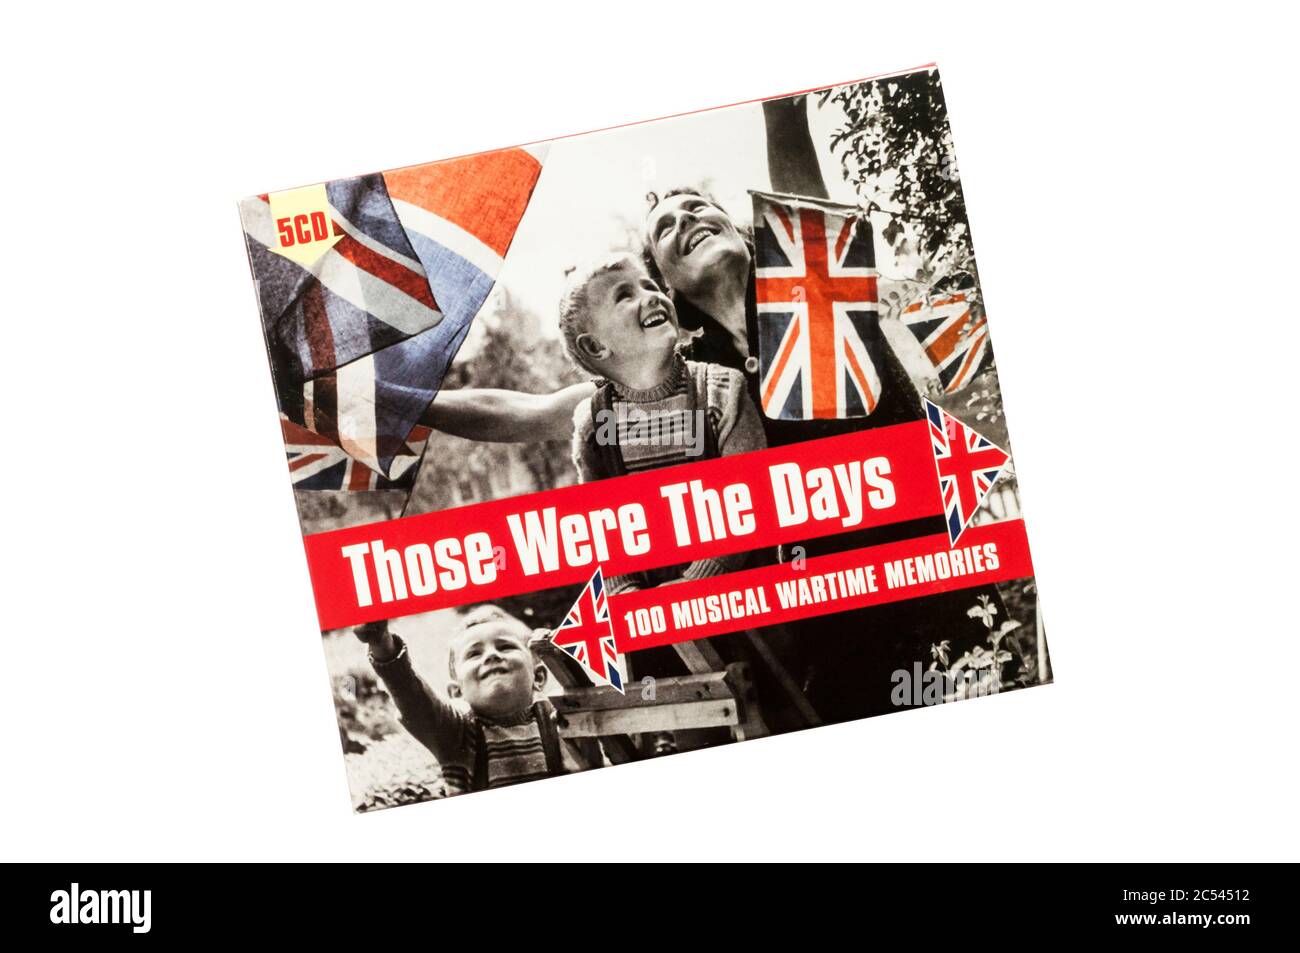 5 CD caja titulado esos eran los días, 100 recuerdos de guerra musical. Foto de stock